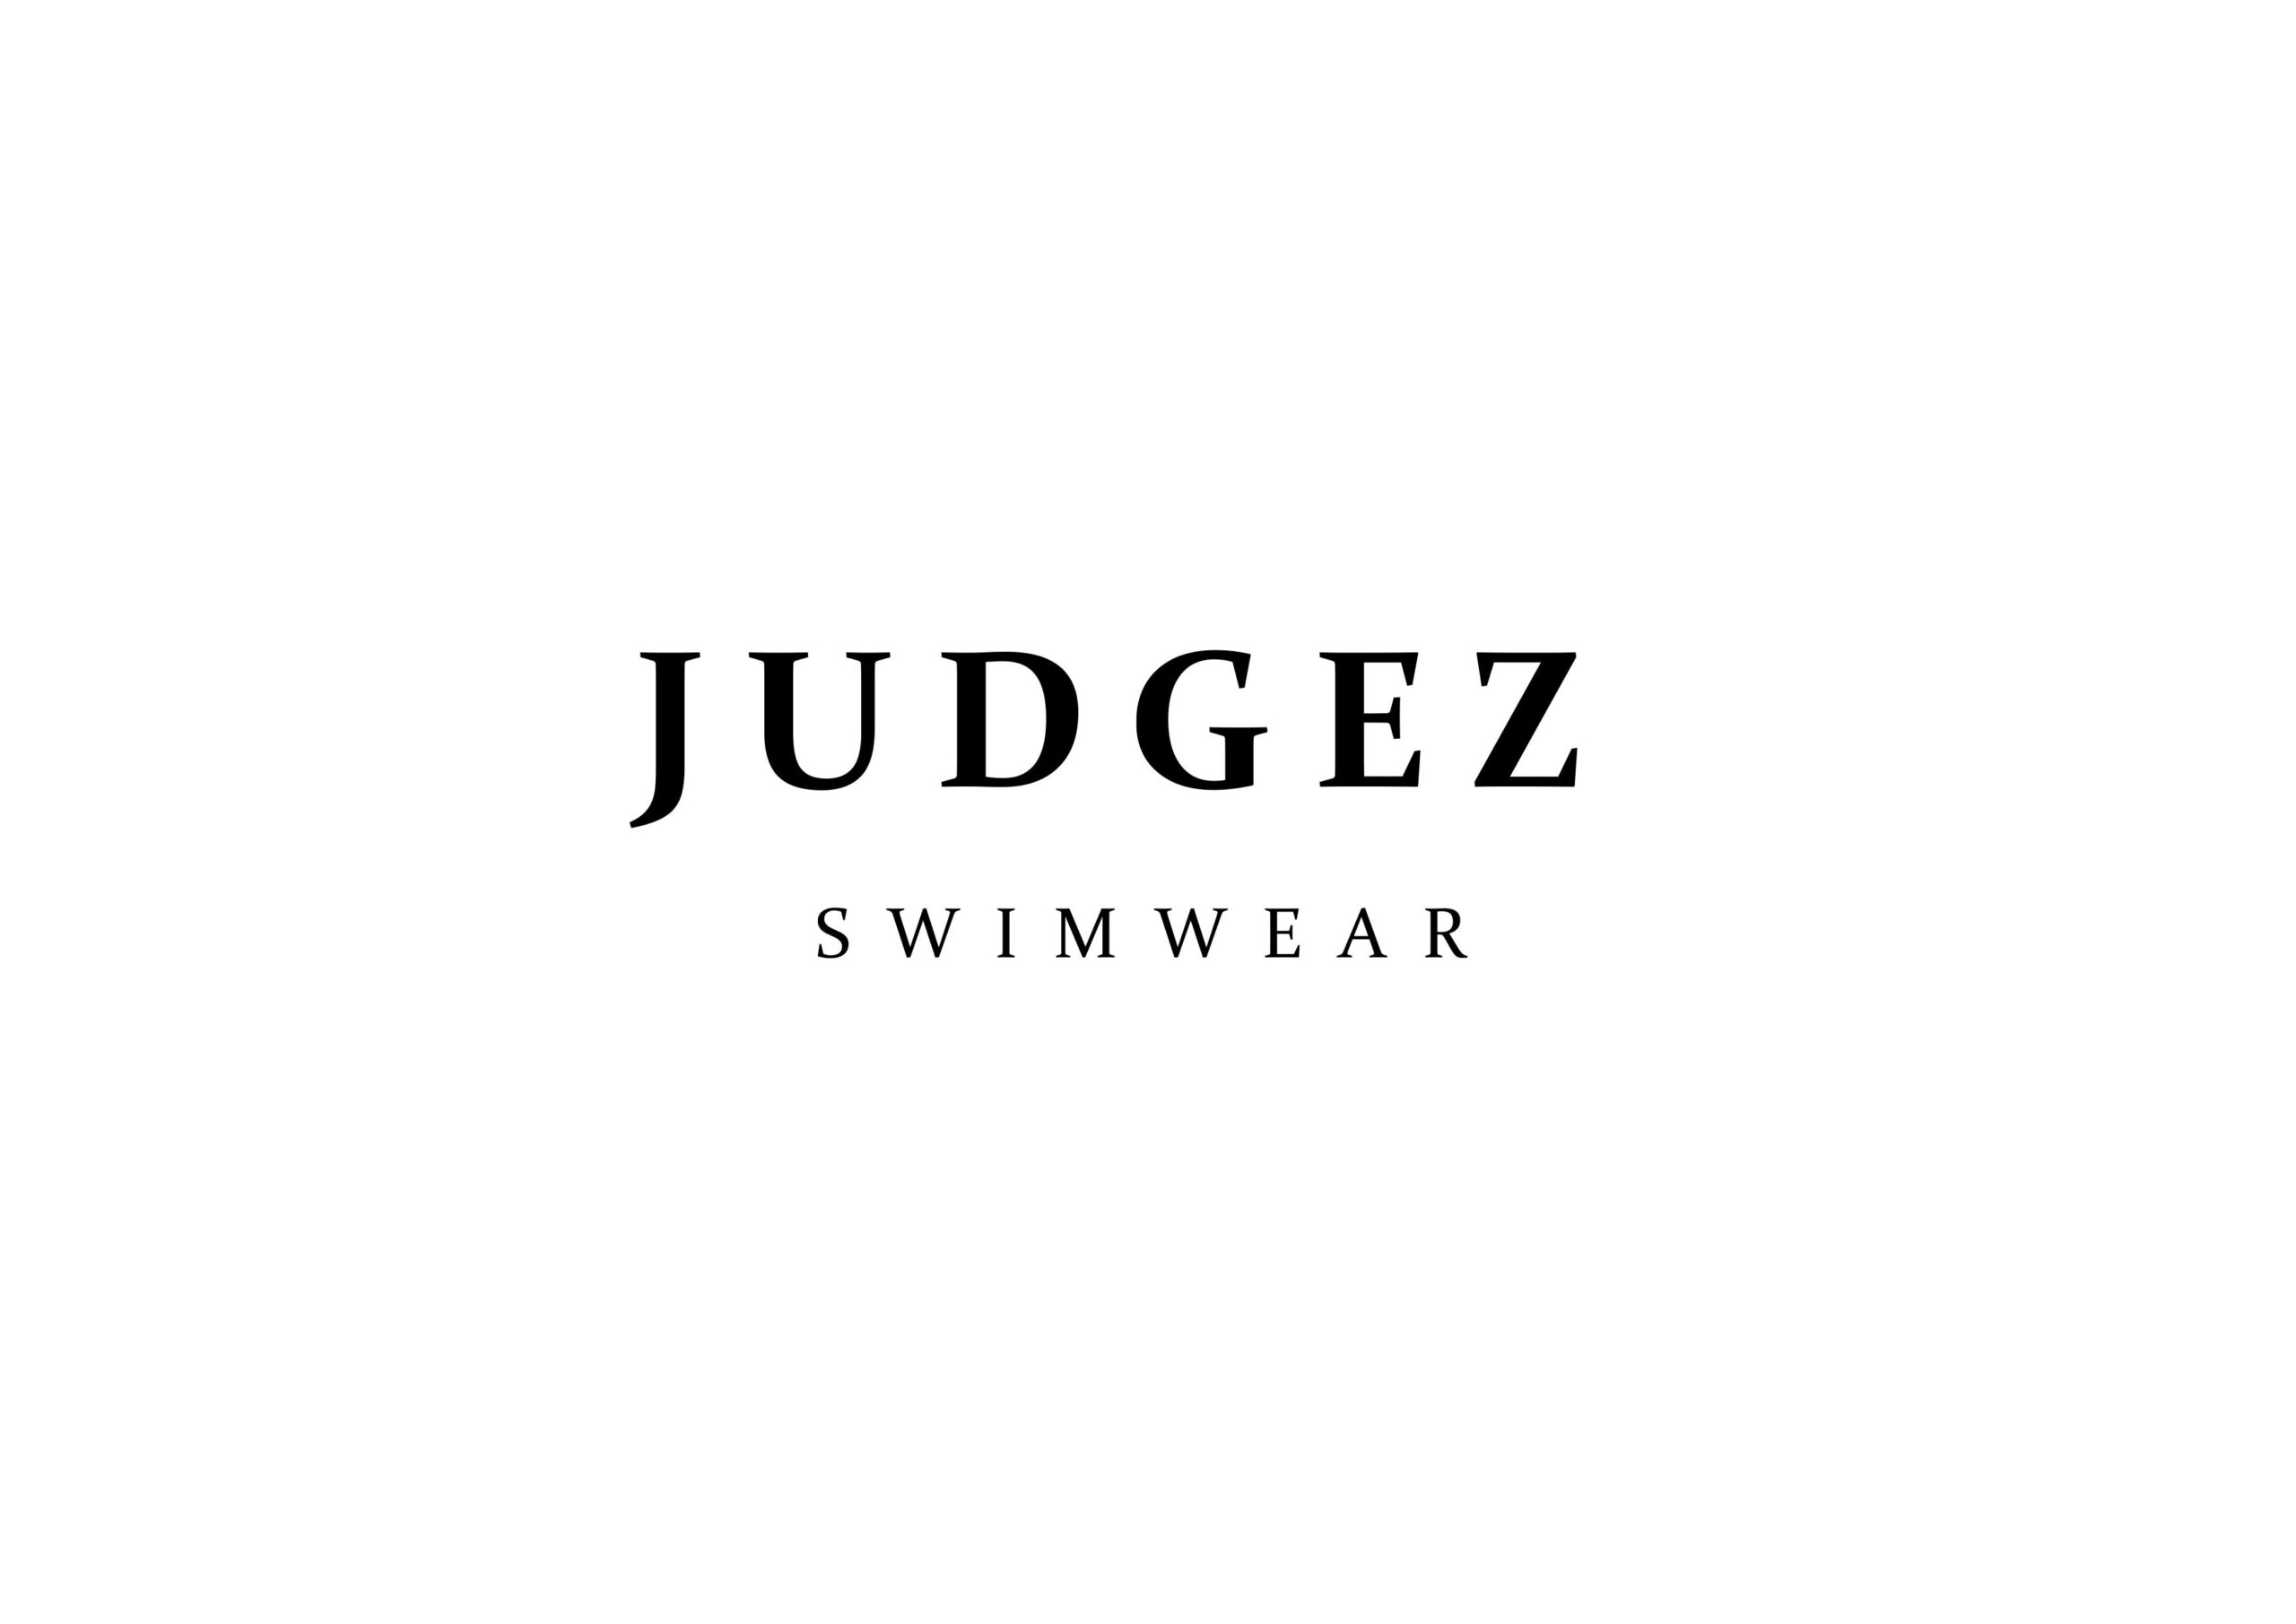 Judgez Swimwear